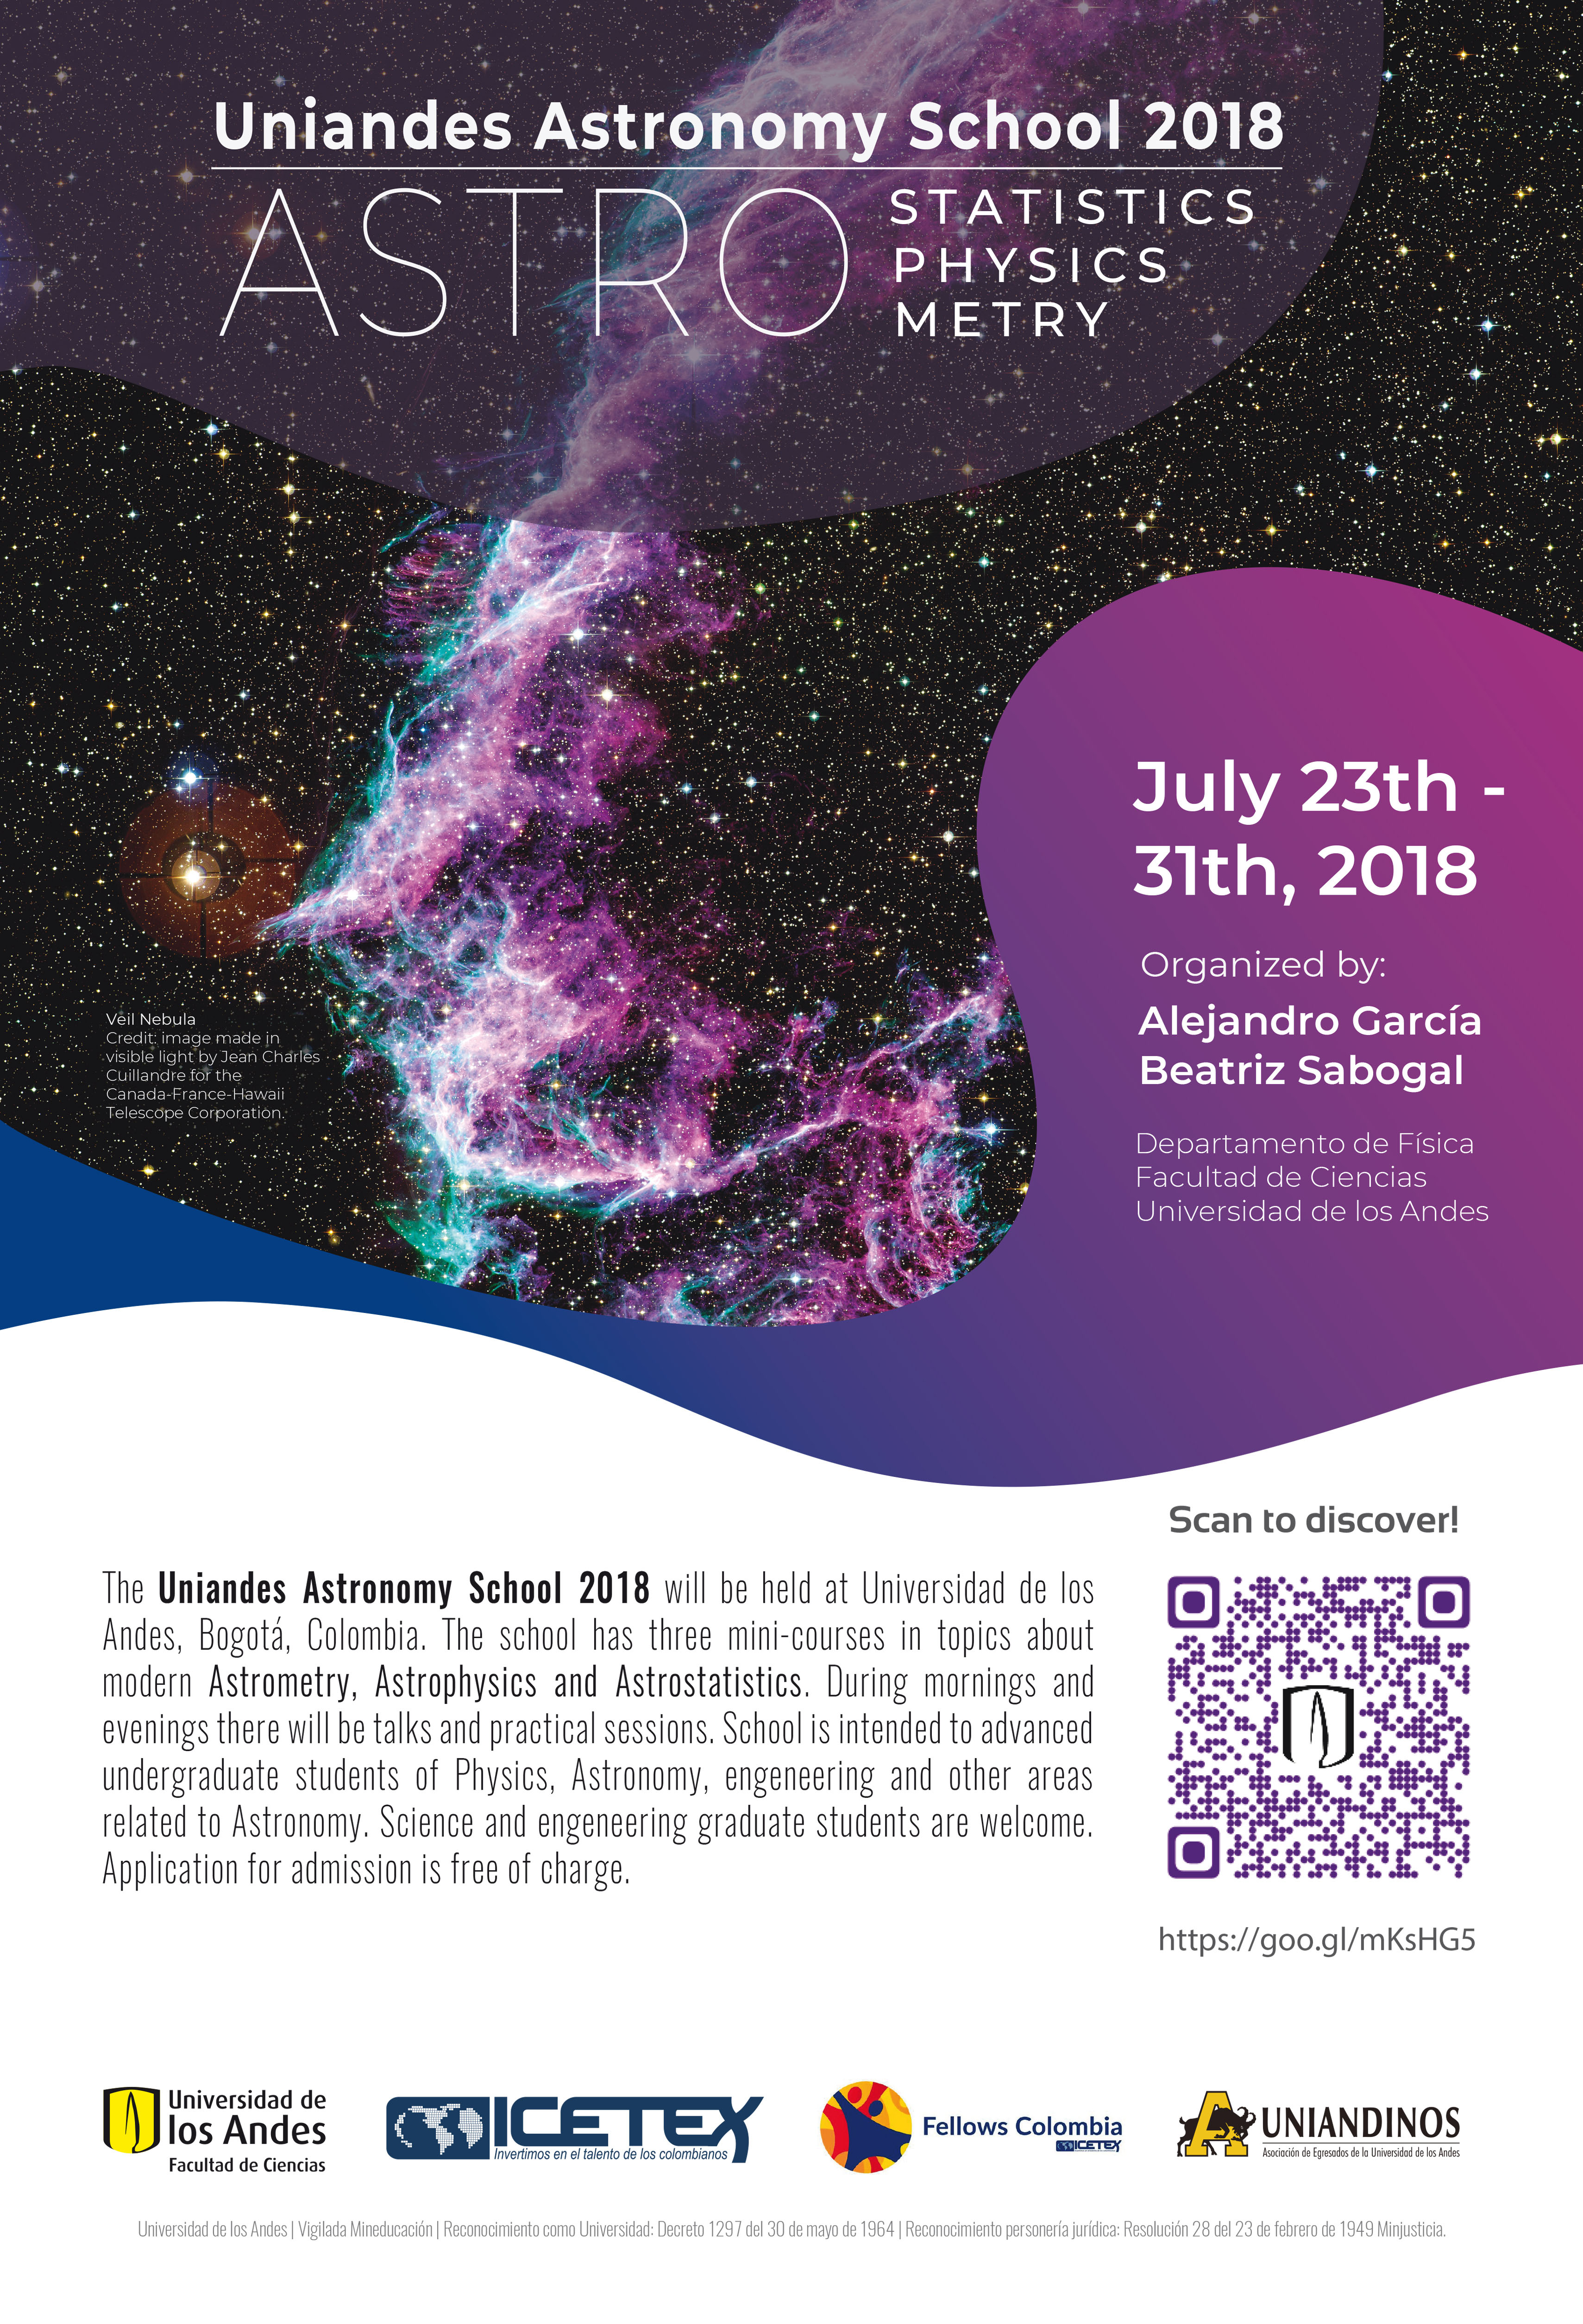 The Uniandes Astronomy School 2018